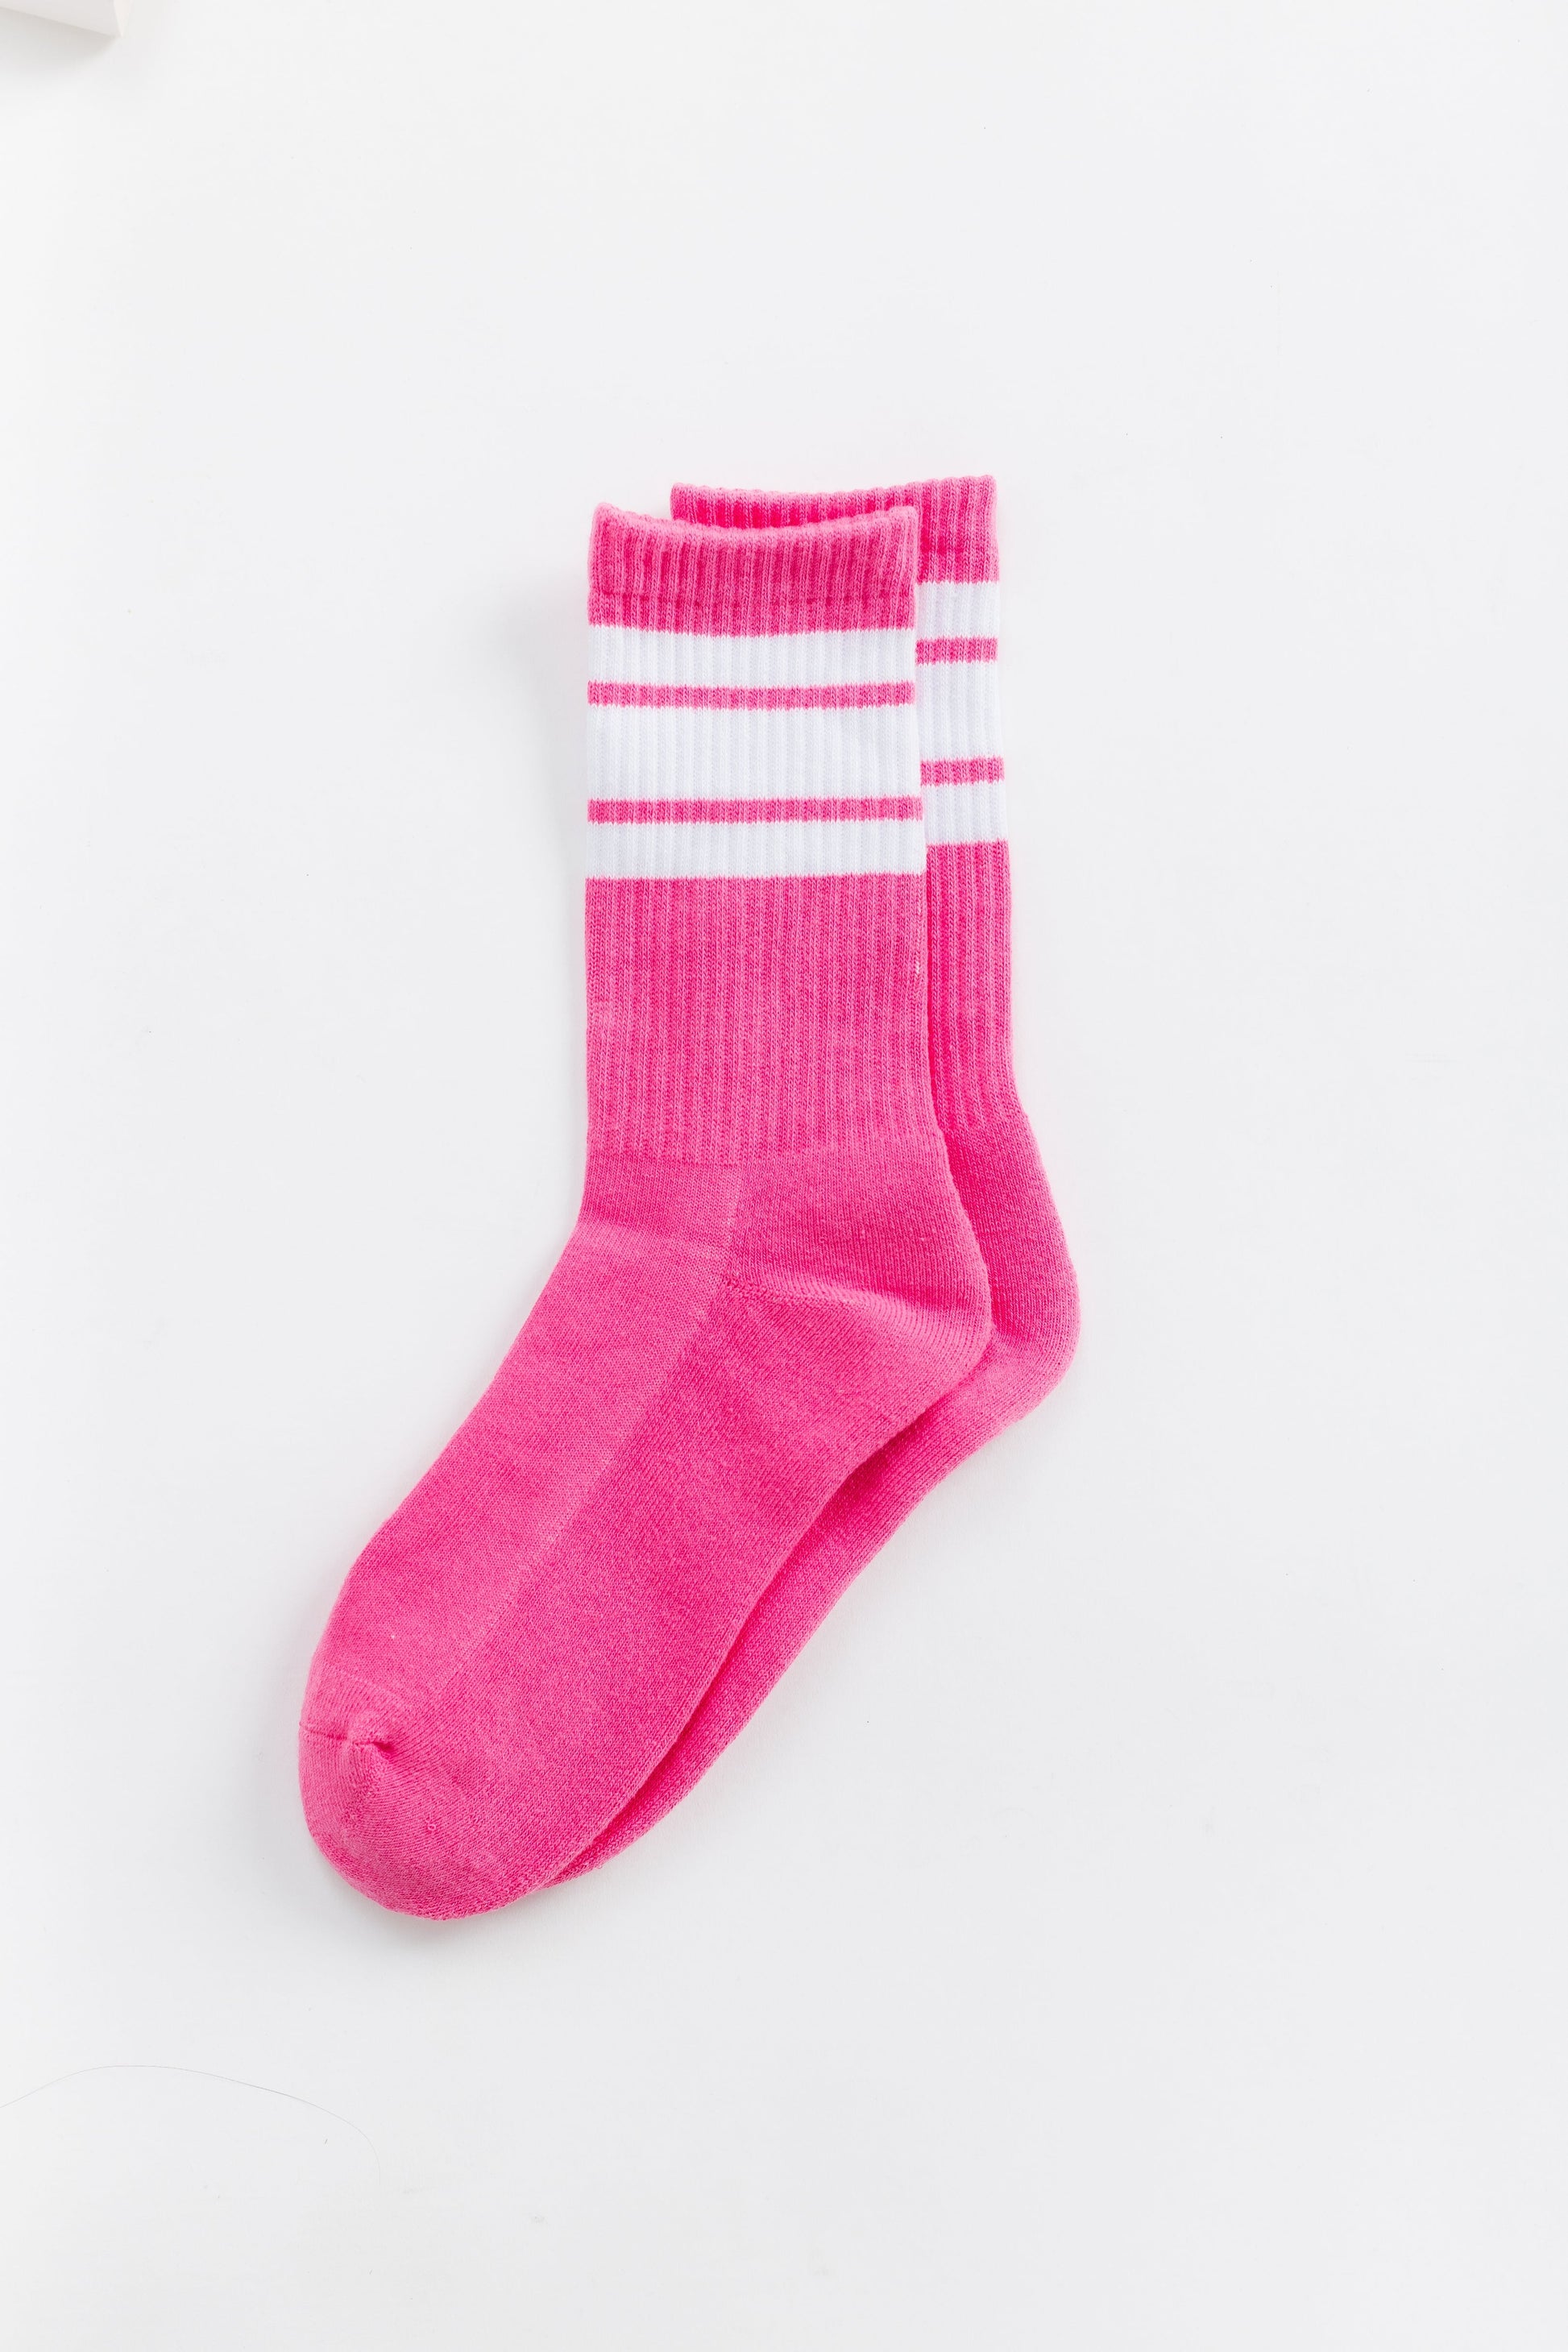 Cove Vail Stripe Socks WOMEN'S SOCKS Cove Accessories Bright Pink OS 